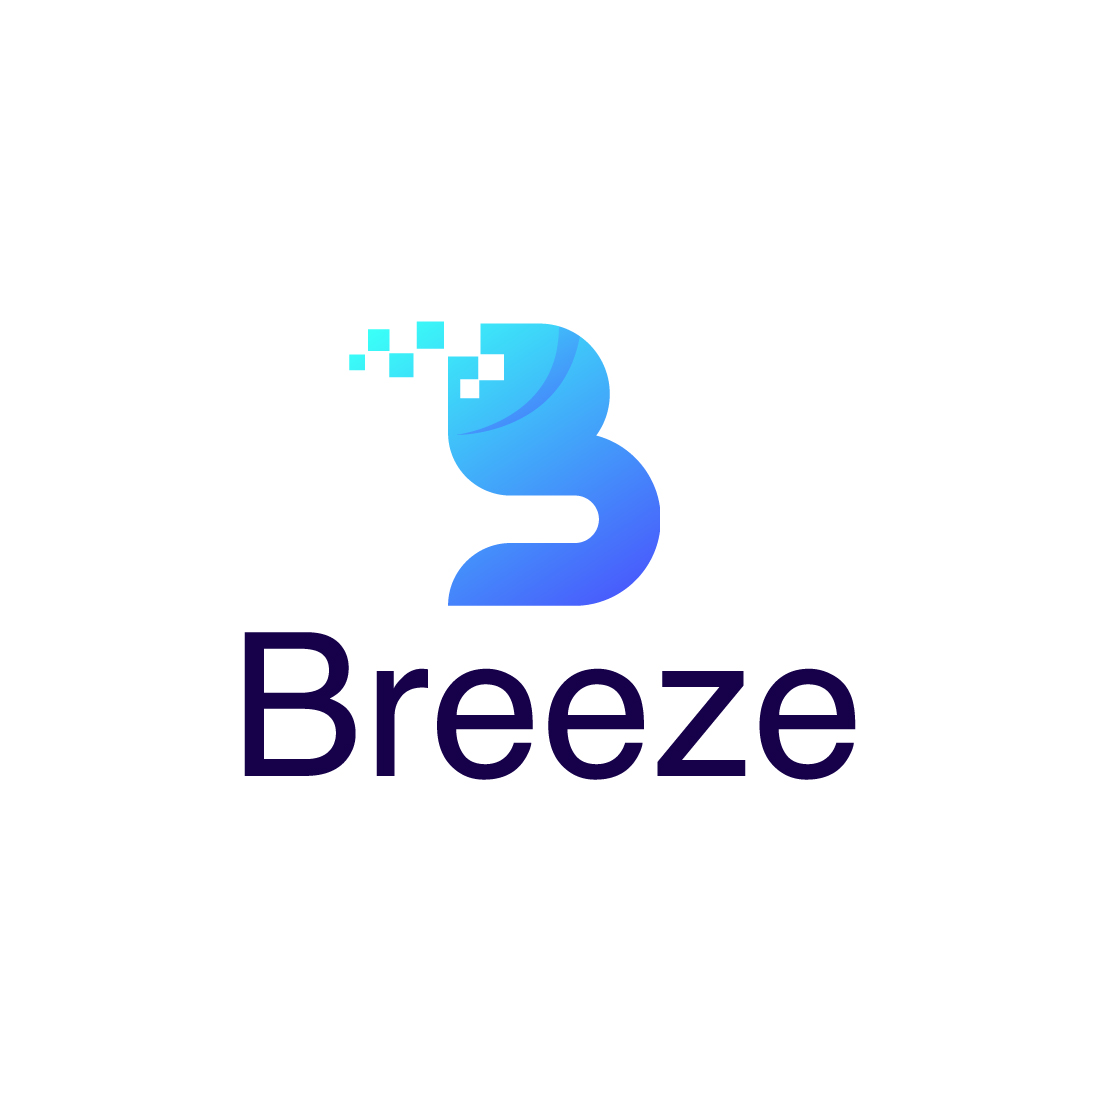 Breeze Logo design, Simple, Minimal, technology preview image.